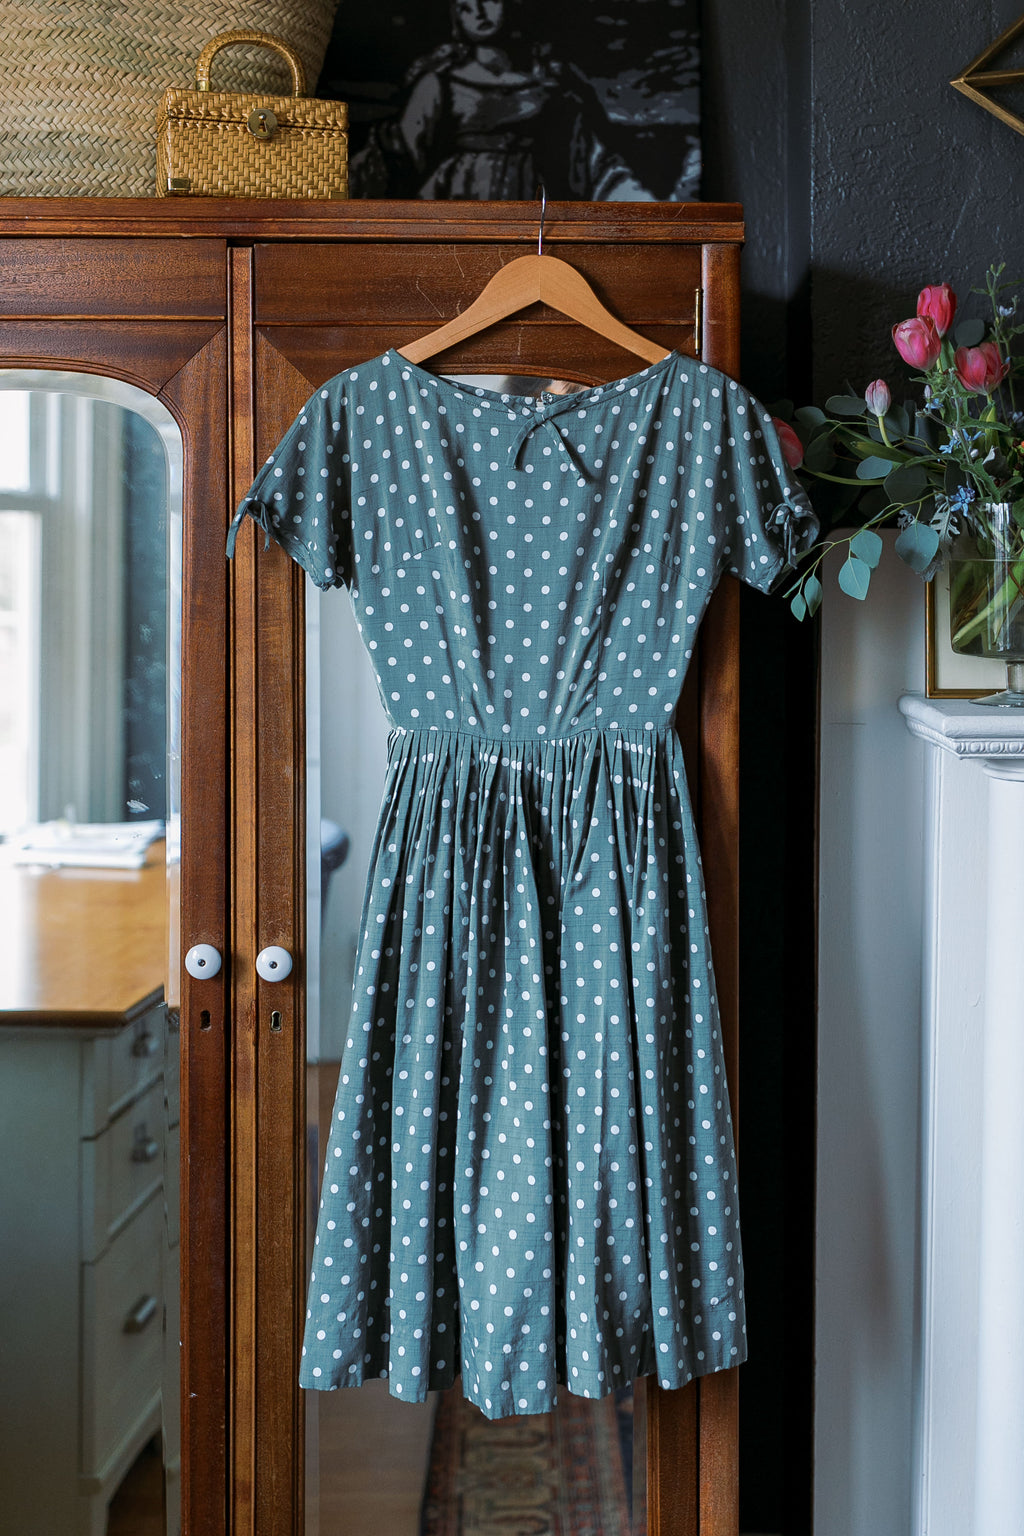 Vintage 50s Polka Dot A-Line Dress